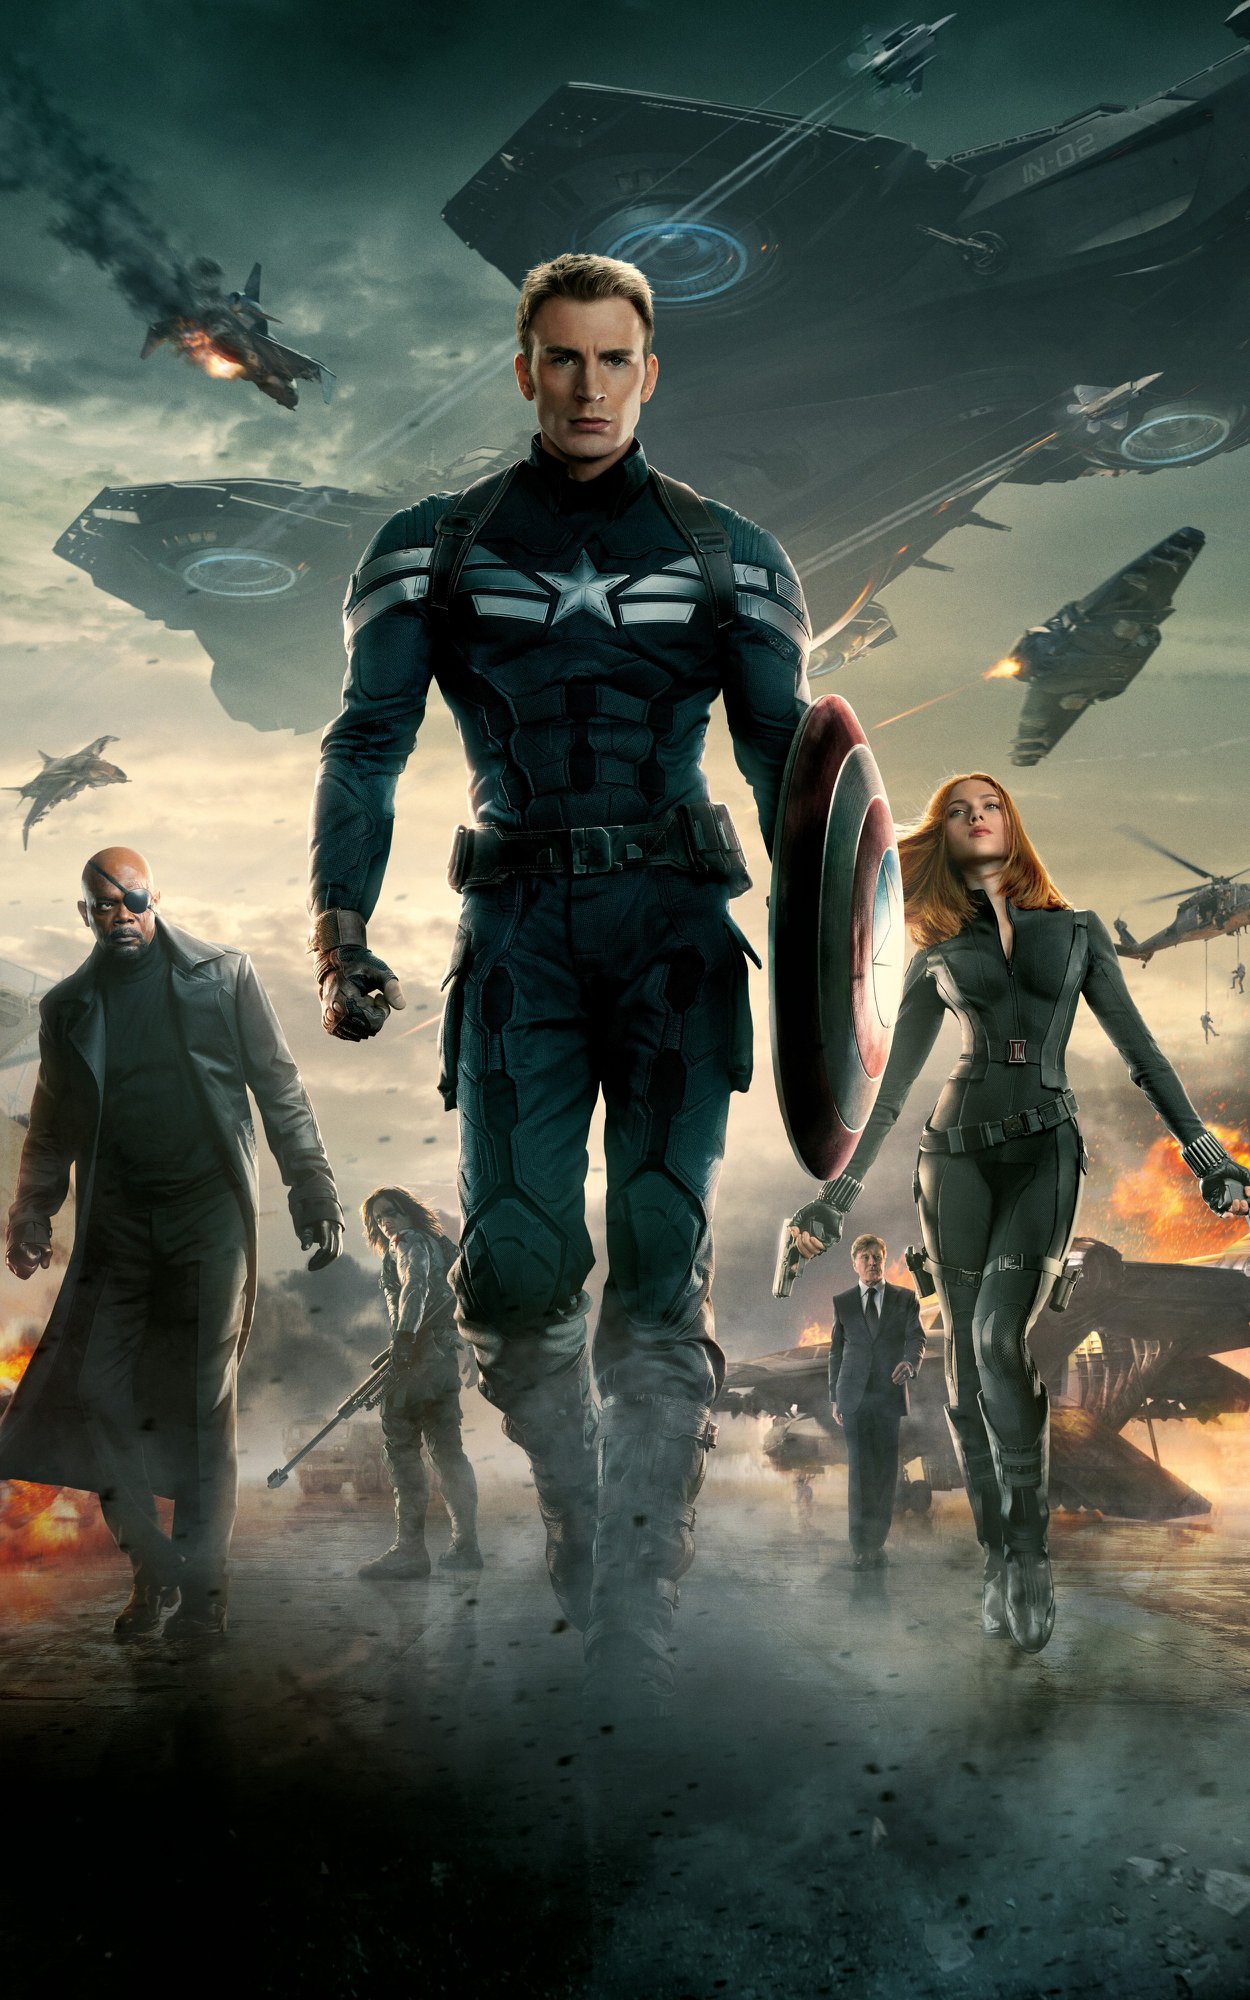 Capta america steve rogers from the avengers marvel superhero for android mobile phone